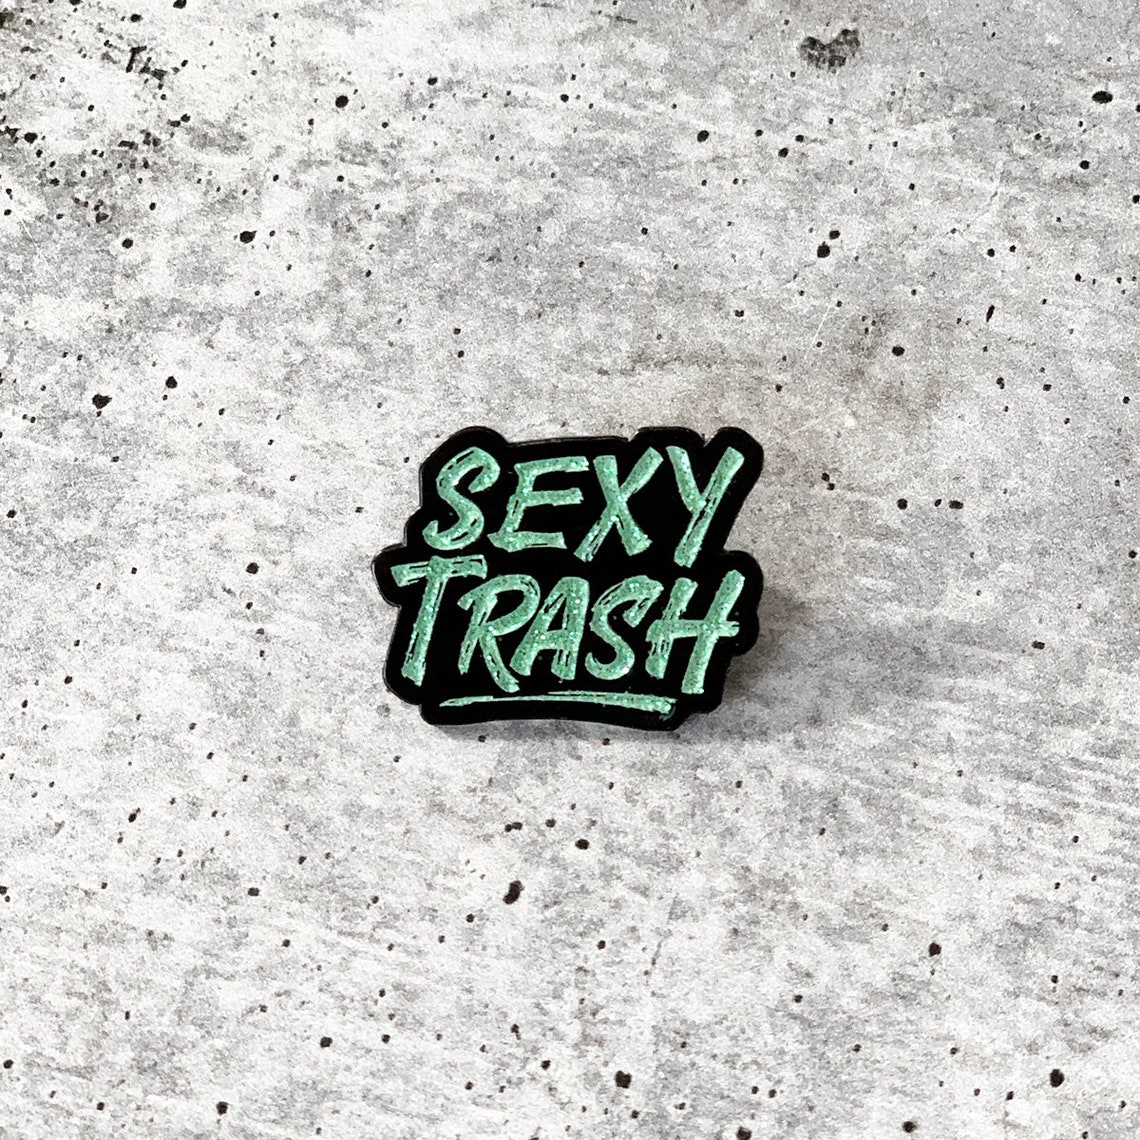 Ghost Bitch Sexy Trash Lapel Pin Set Etsy